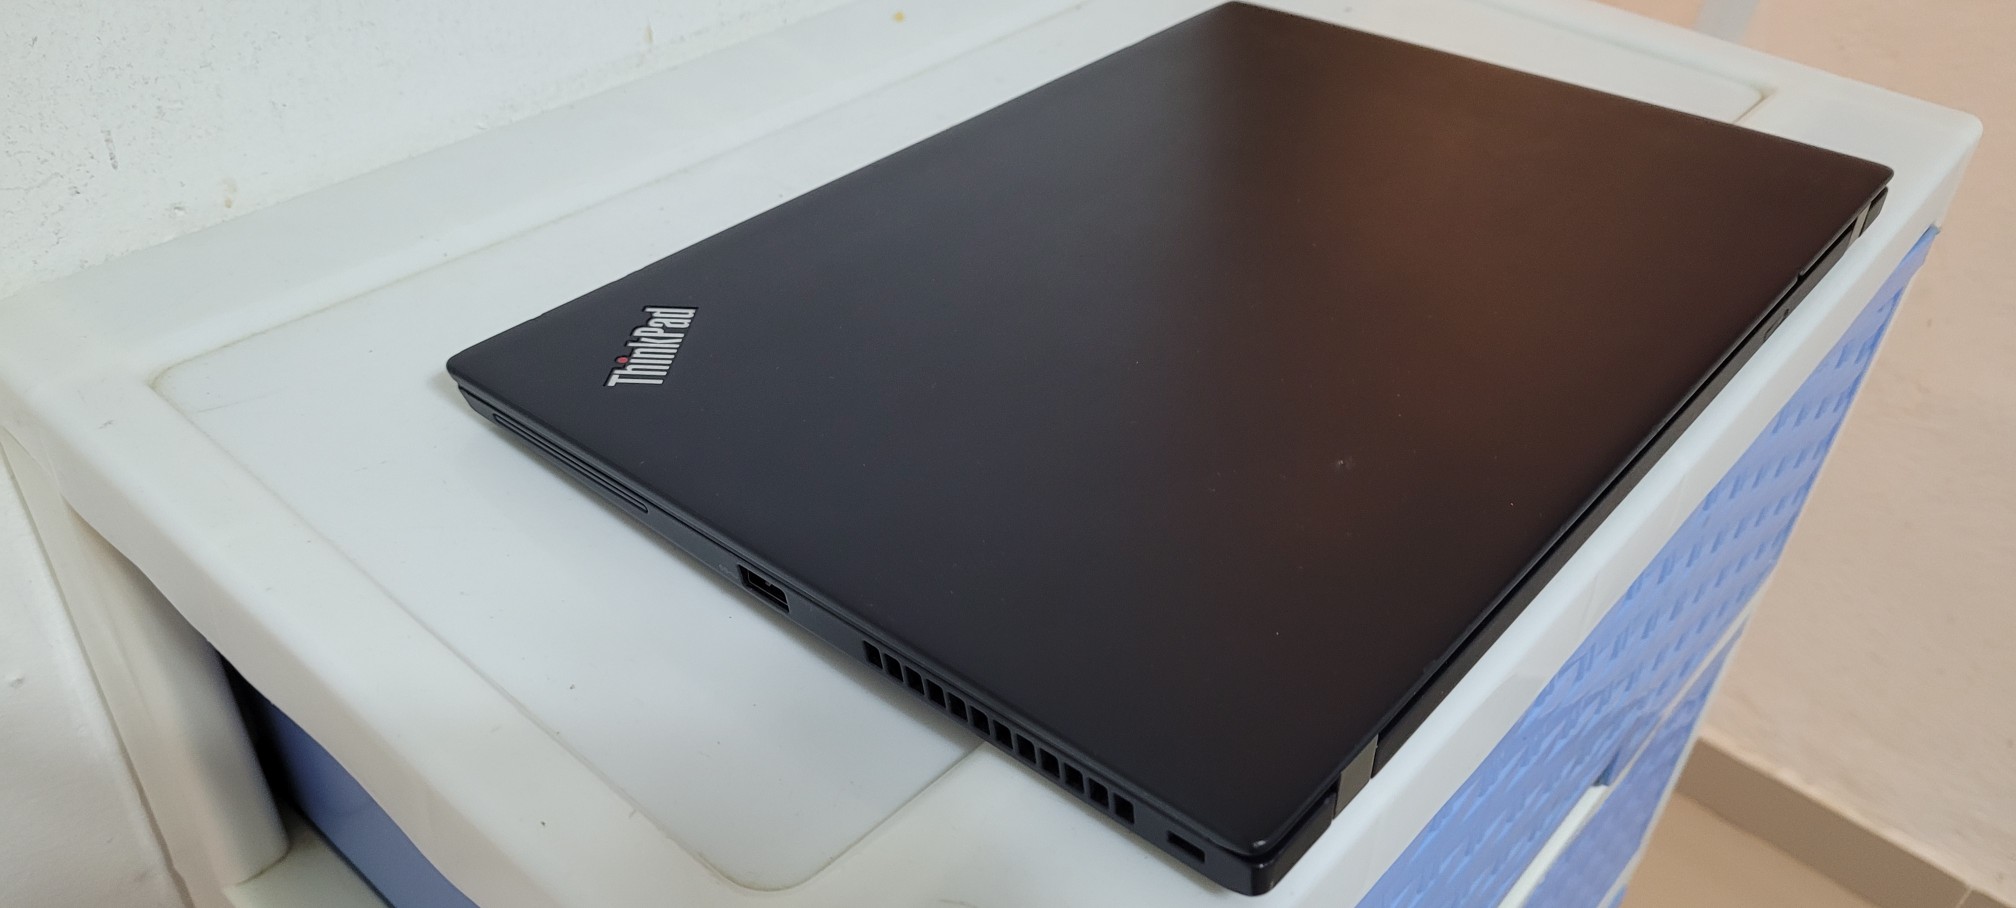 computadoras y laptops - Lenovo T470 14 Pulg Core i7 7ma Gen Ram 8gb ddr4 Disco 256gb SSD full 1080p 2